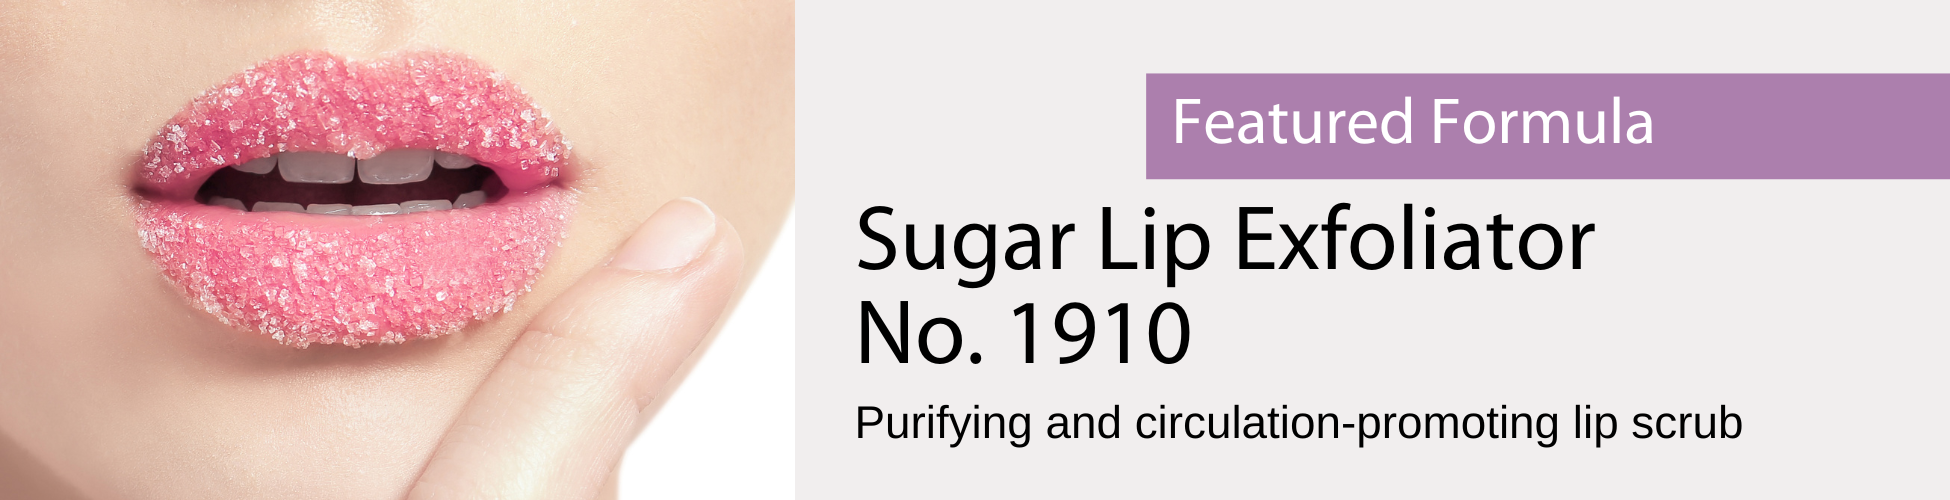 Formula for Sugar Lip Exfoliator